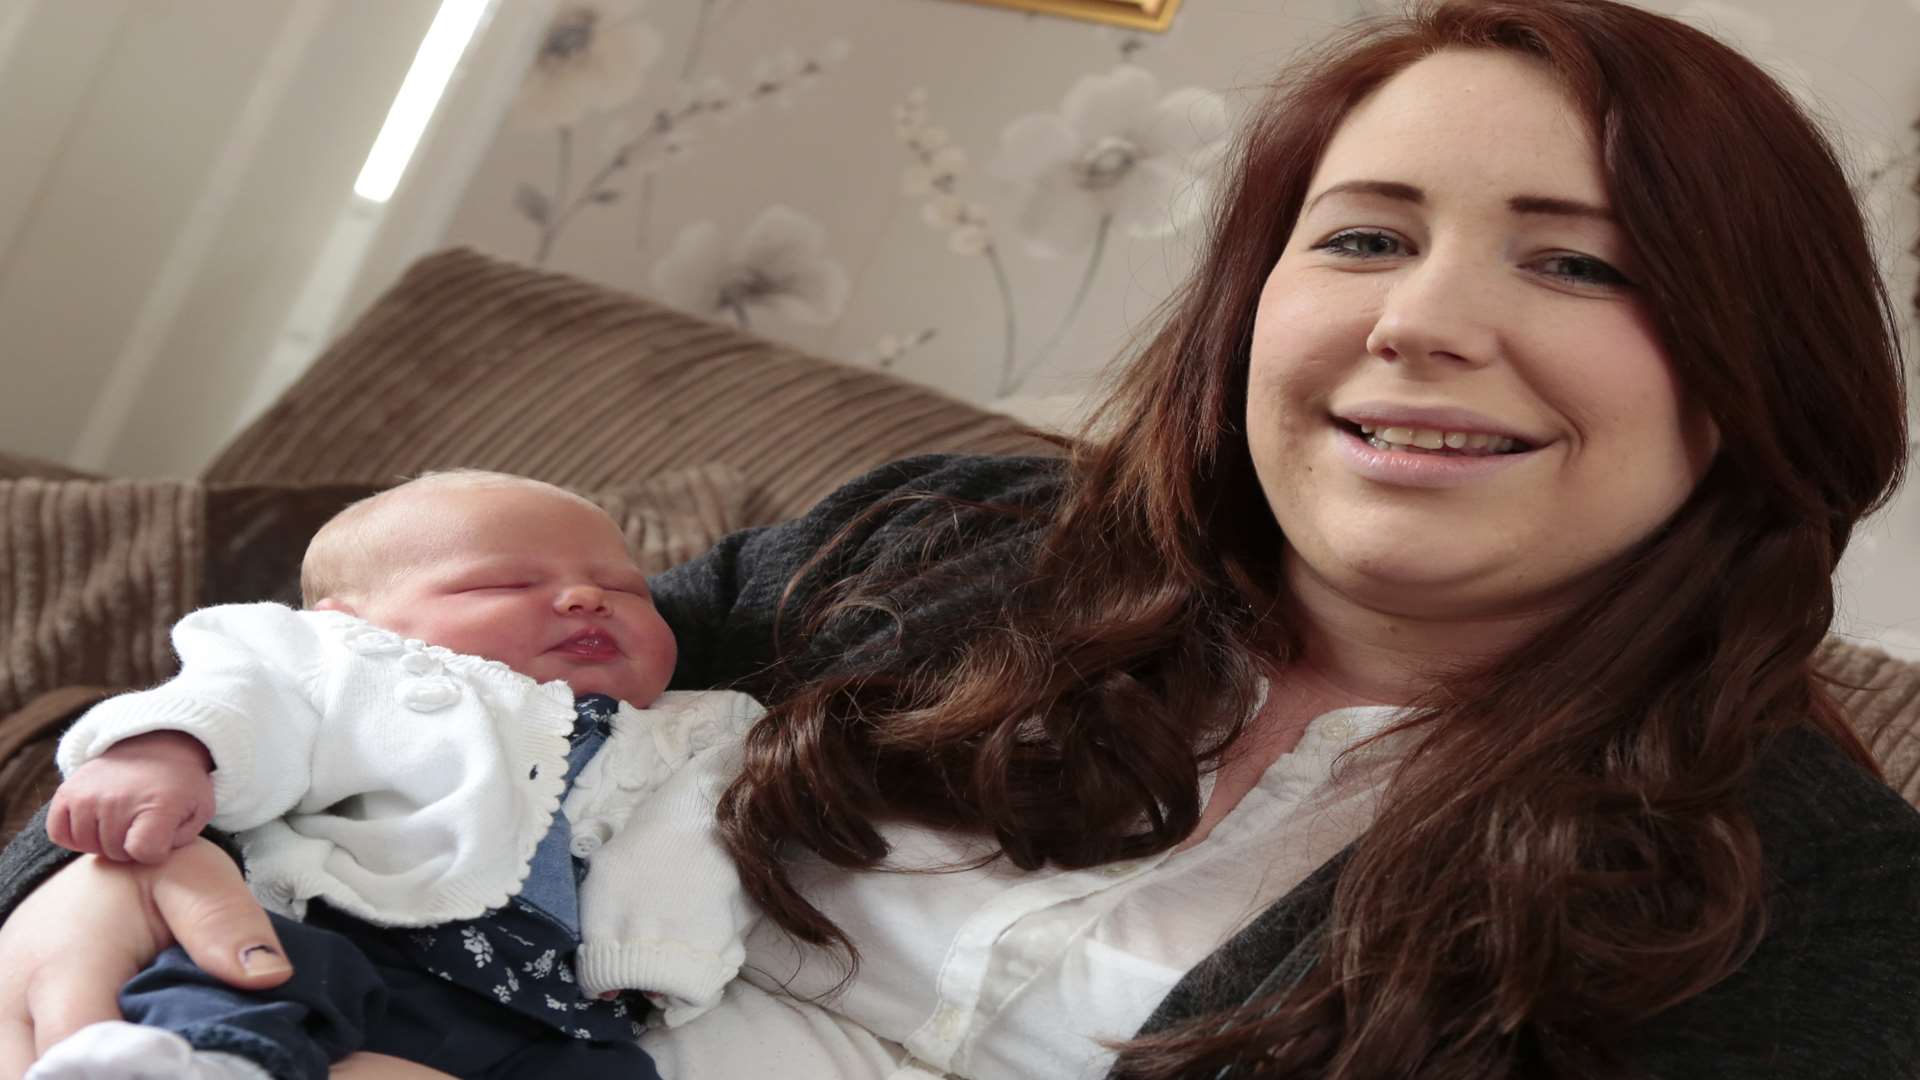 Katey Dingwall and her newborn baby Taylor Tompsett